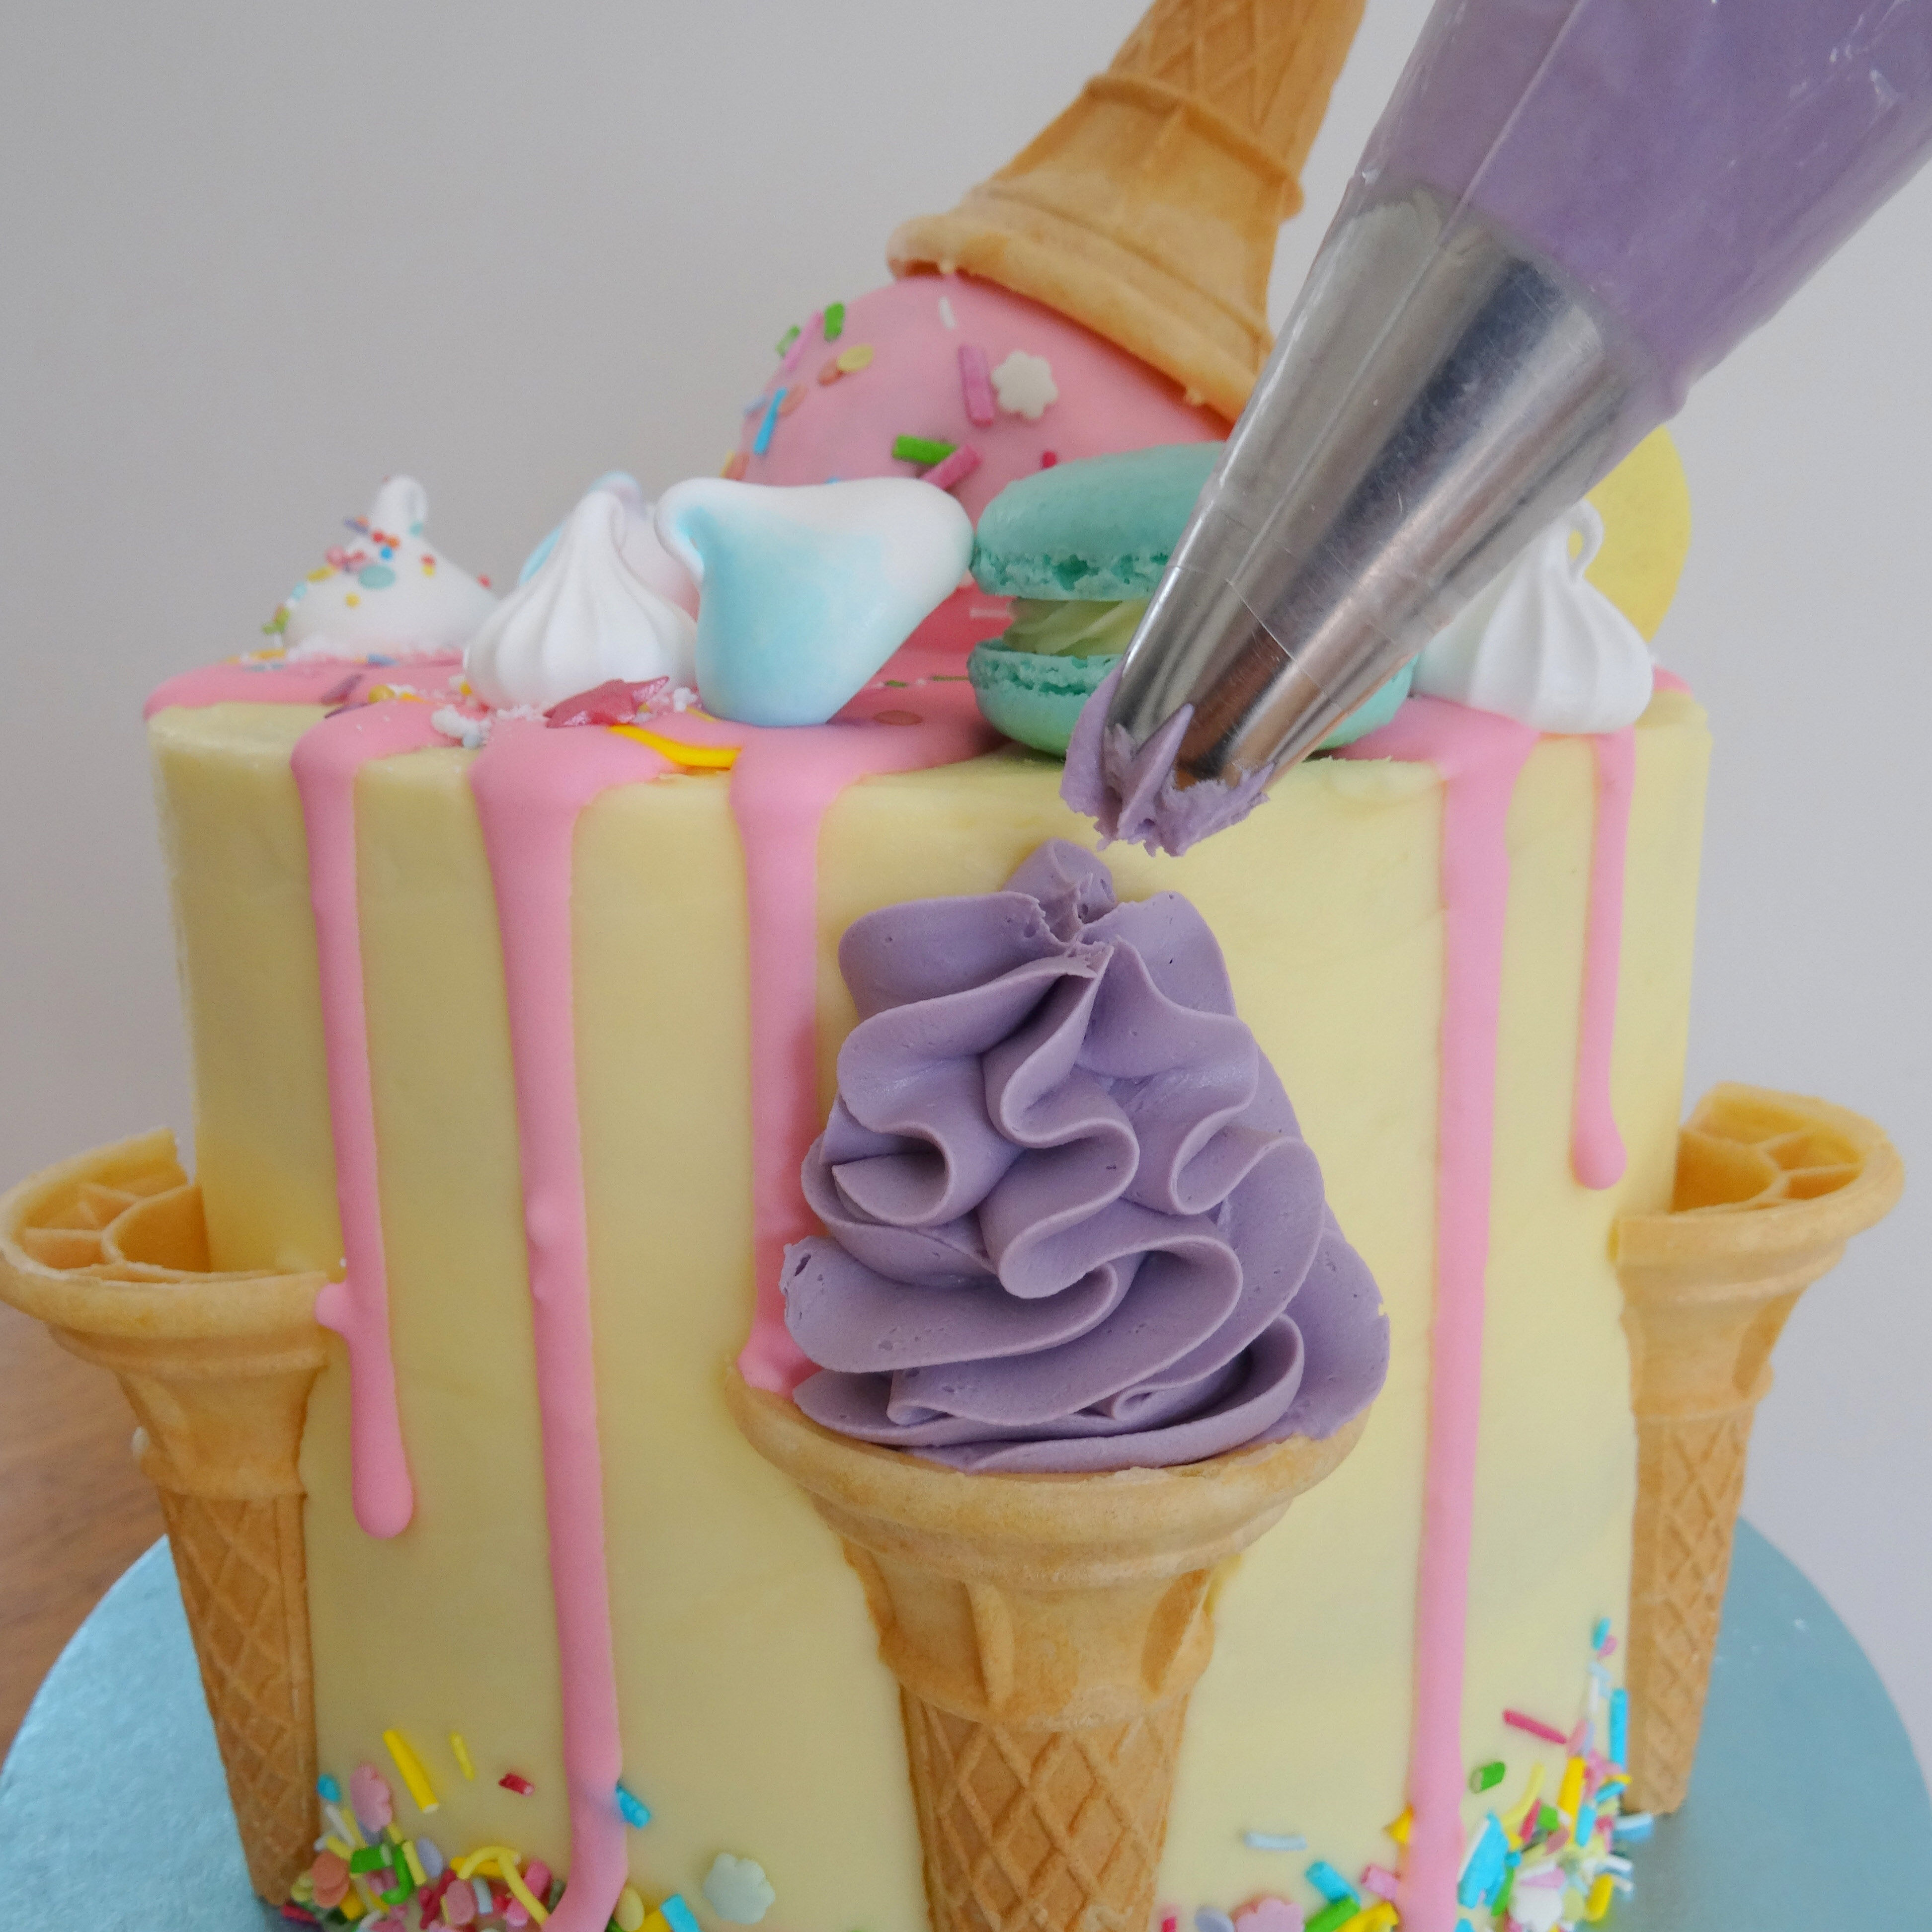 70 Cake Ideas for Birthday & Any Celebration : Ice Cream Cake